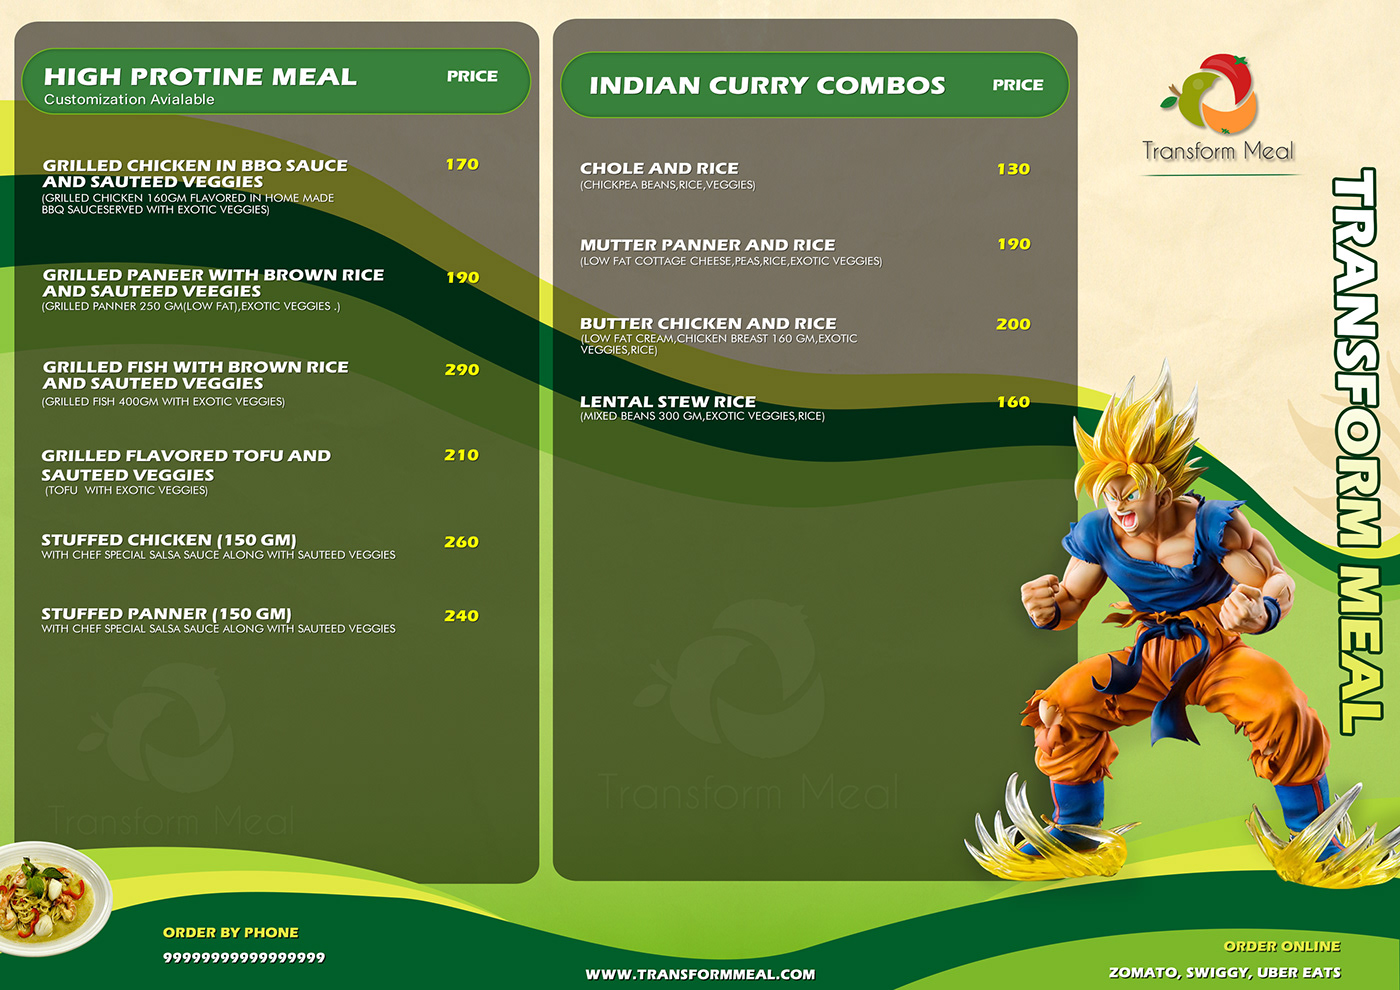 Transform Meal restaurant menu restaurants Menu style hotel menu lunch menu MEAL MENU graphics menu